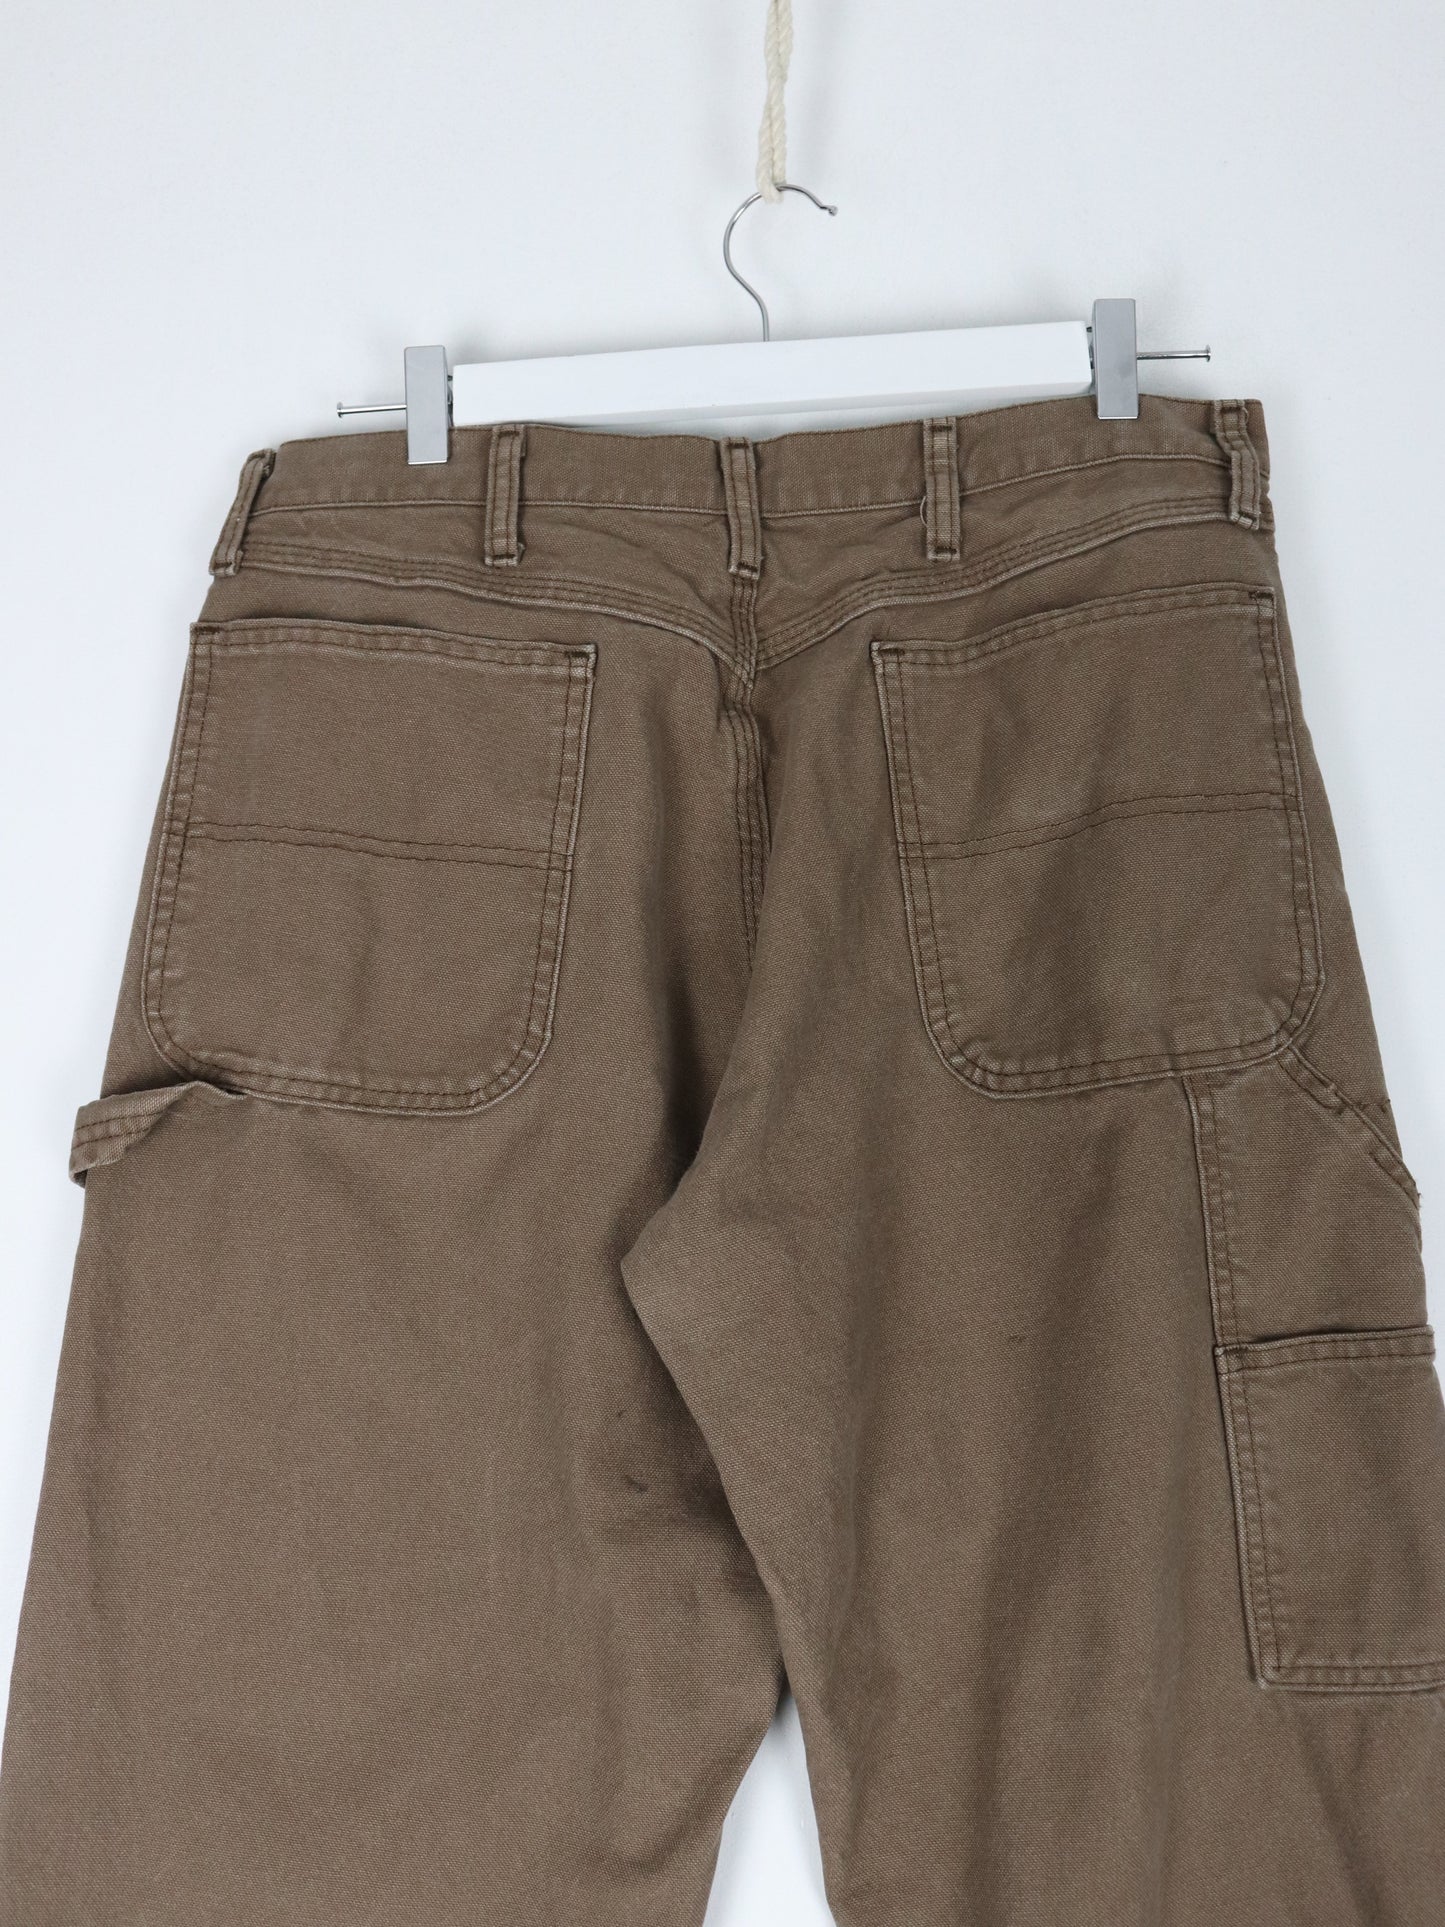 Rustler Pants Mens 34 x 32 Brown Carpenter Work Wear